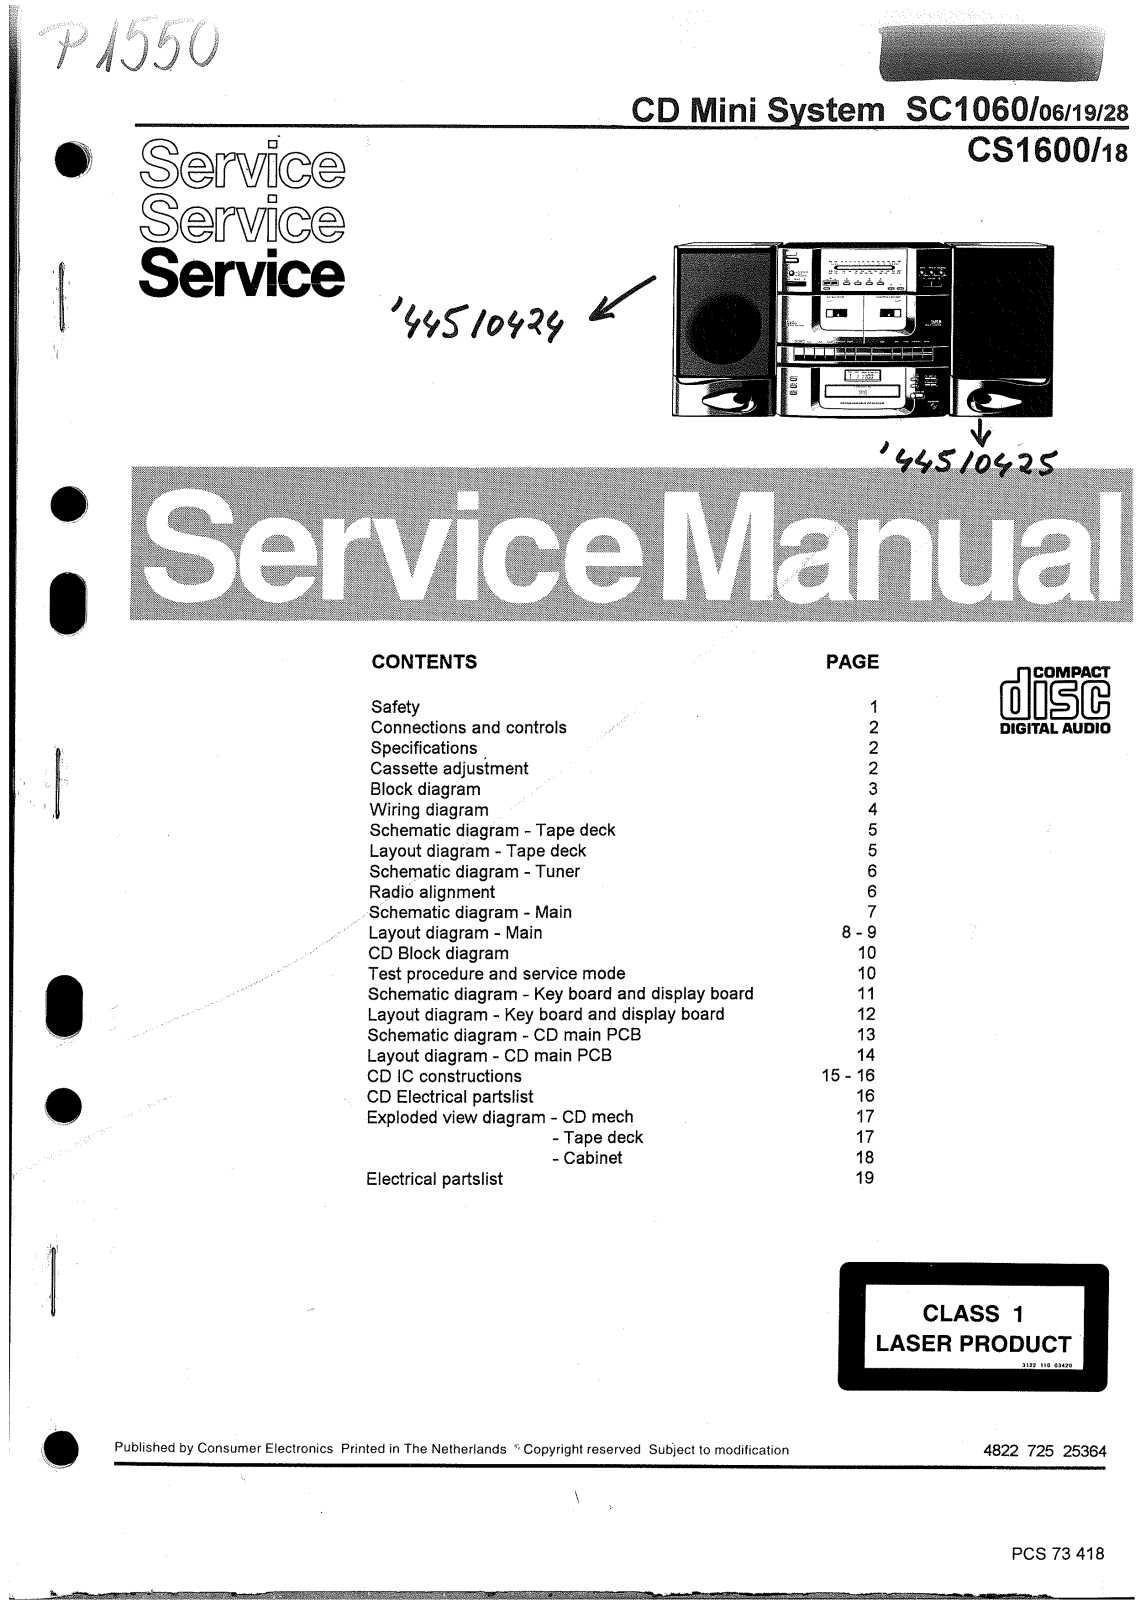 Philips SC-1060, CS-1600 Service Manual